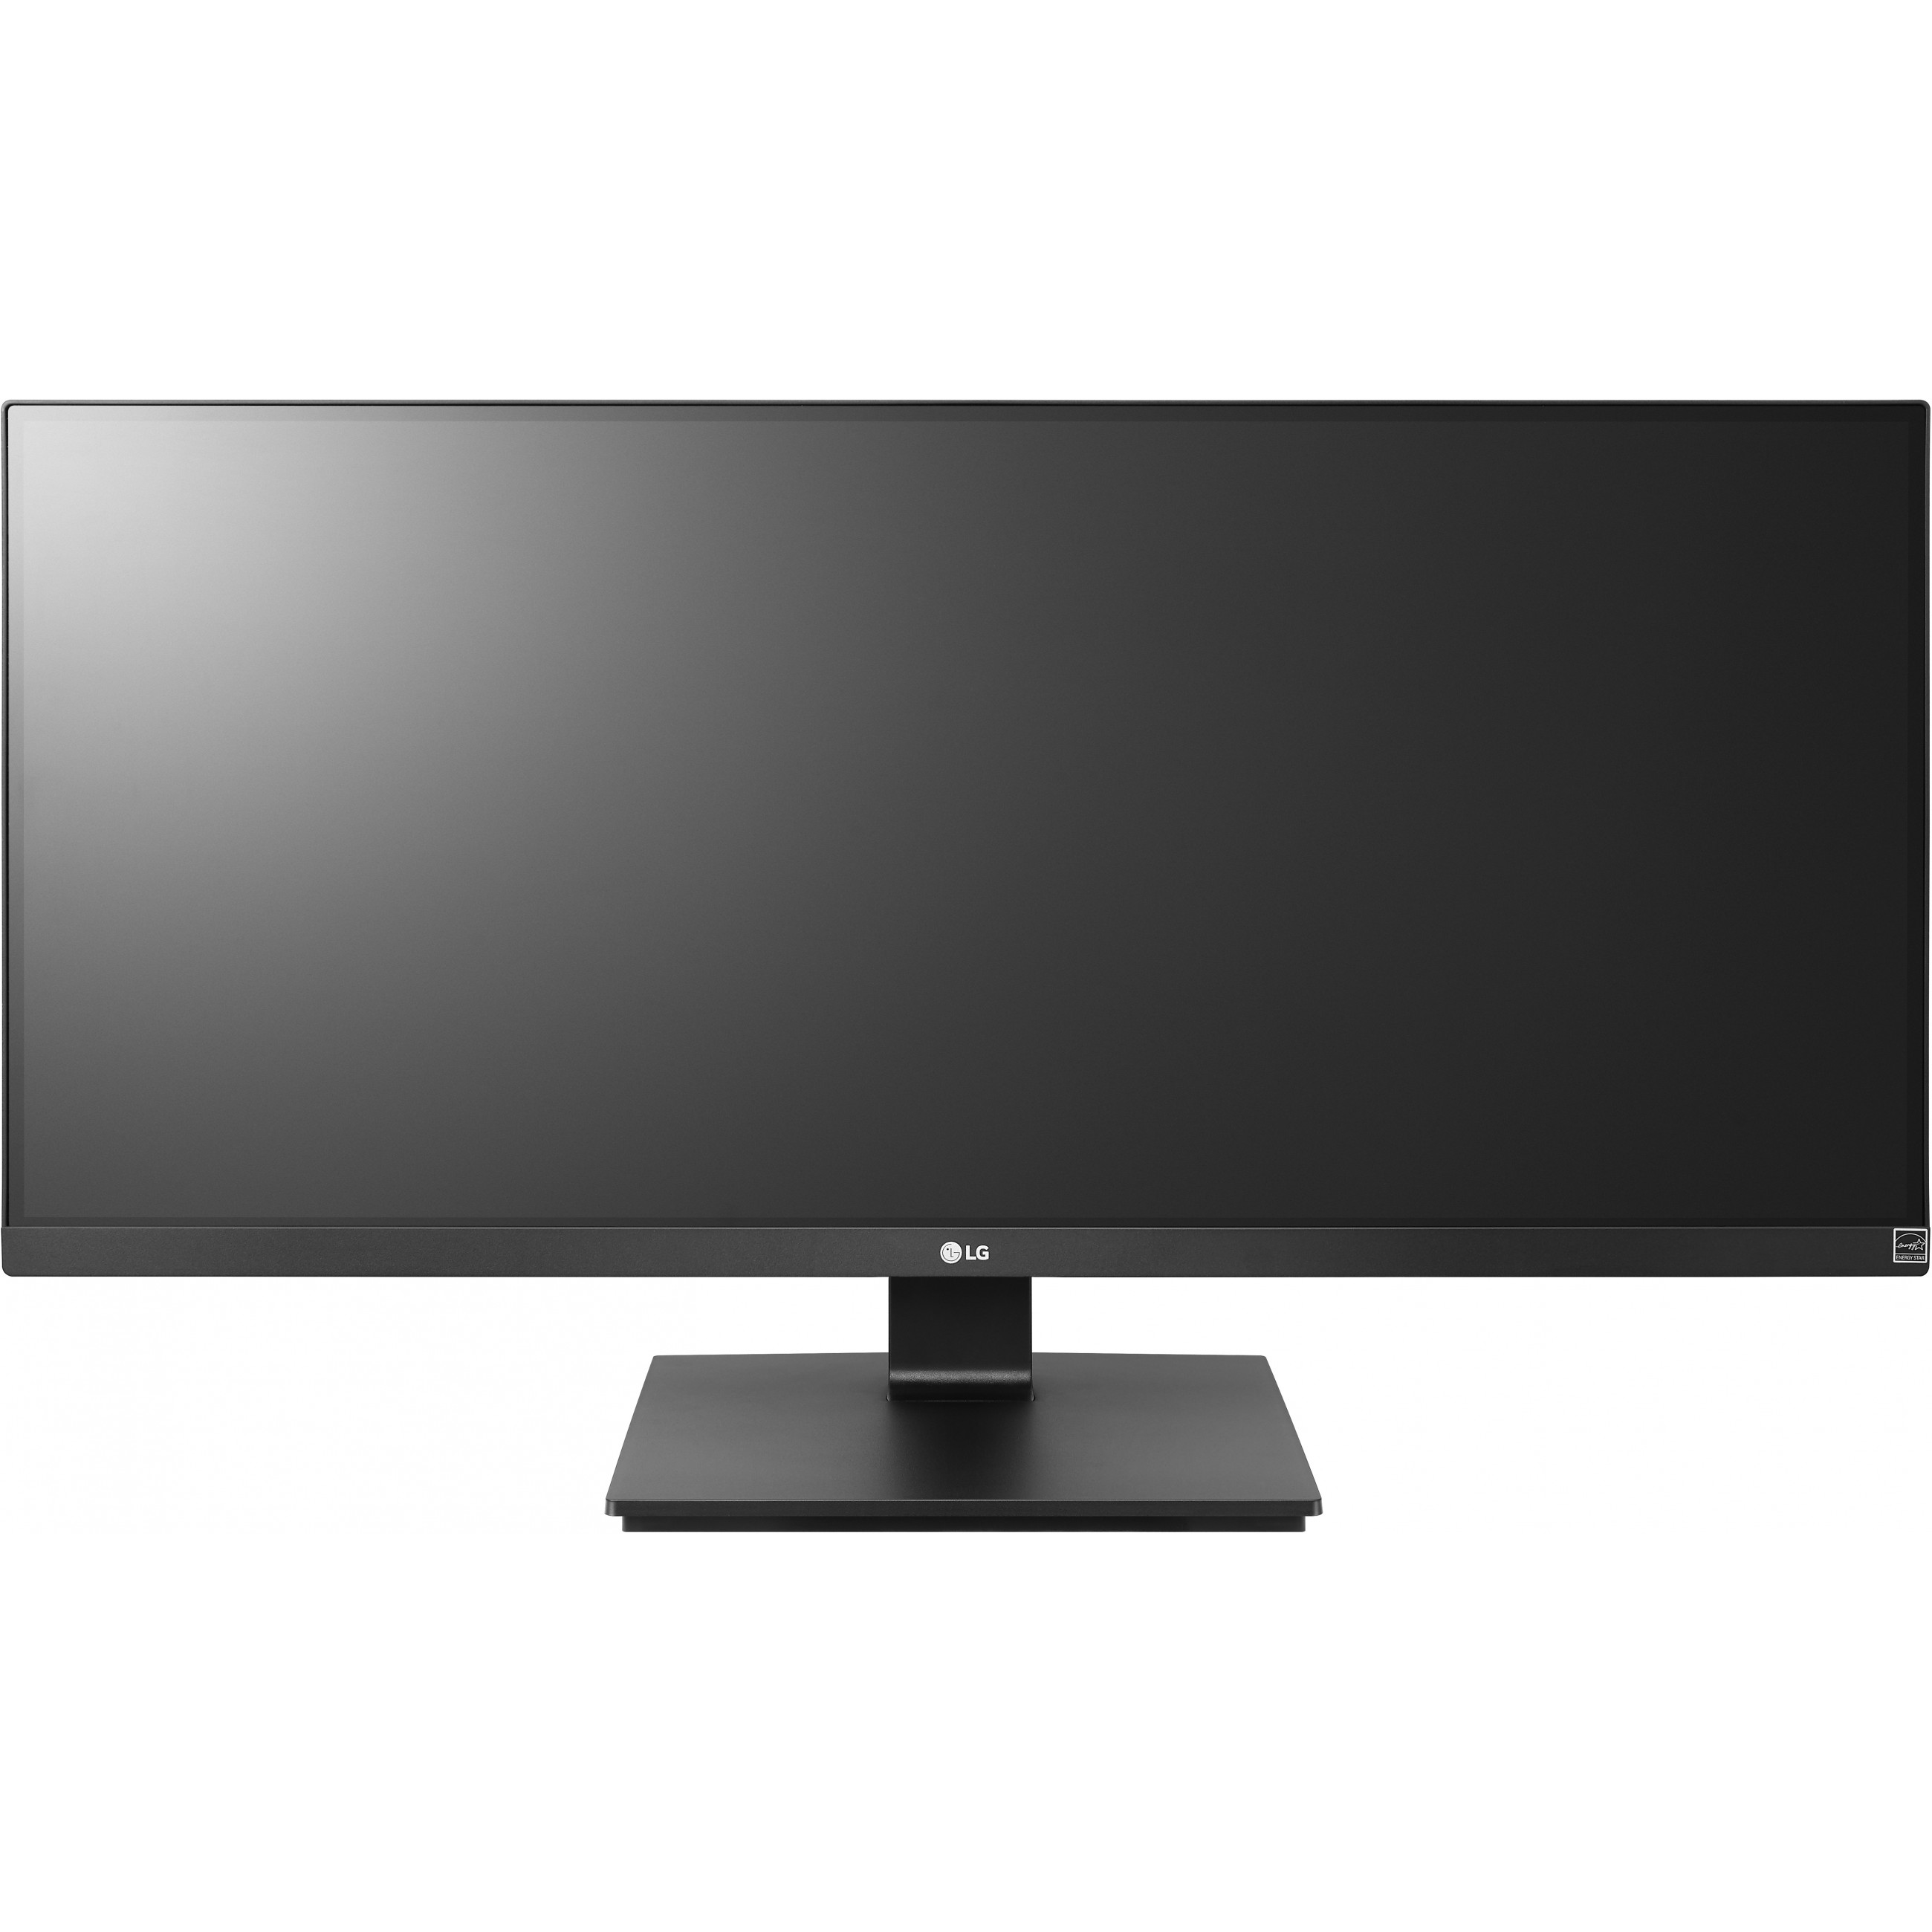 LG 29BN650-B computer monitor - 29BN650-B